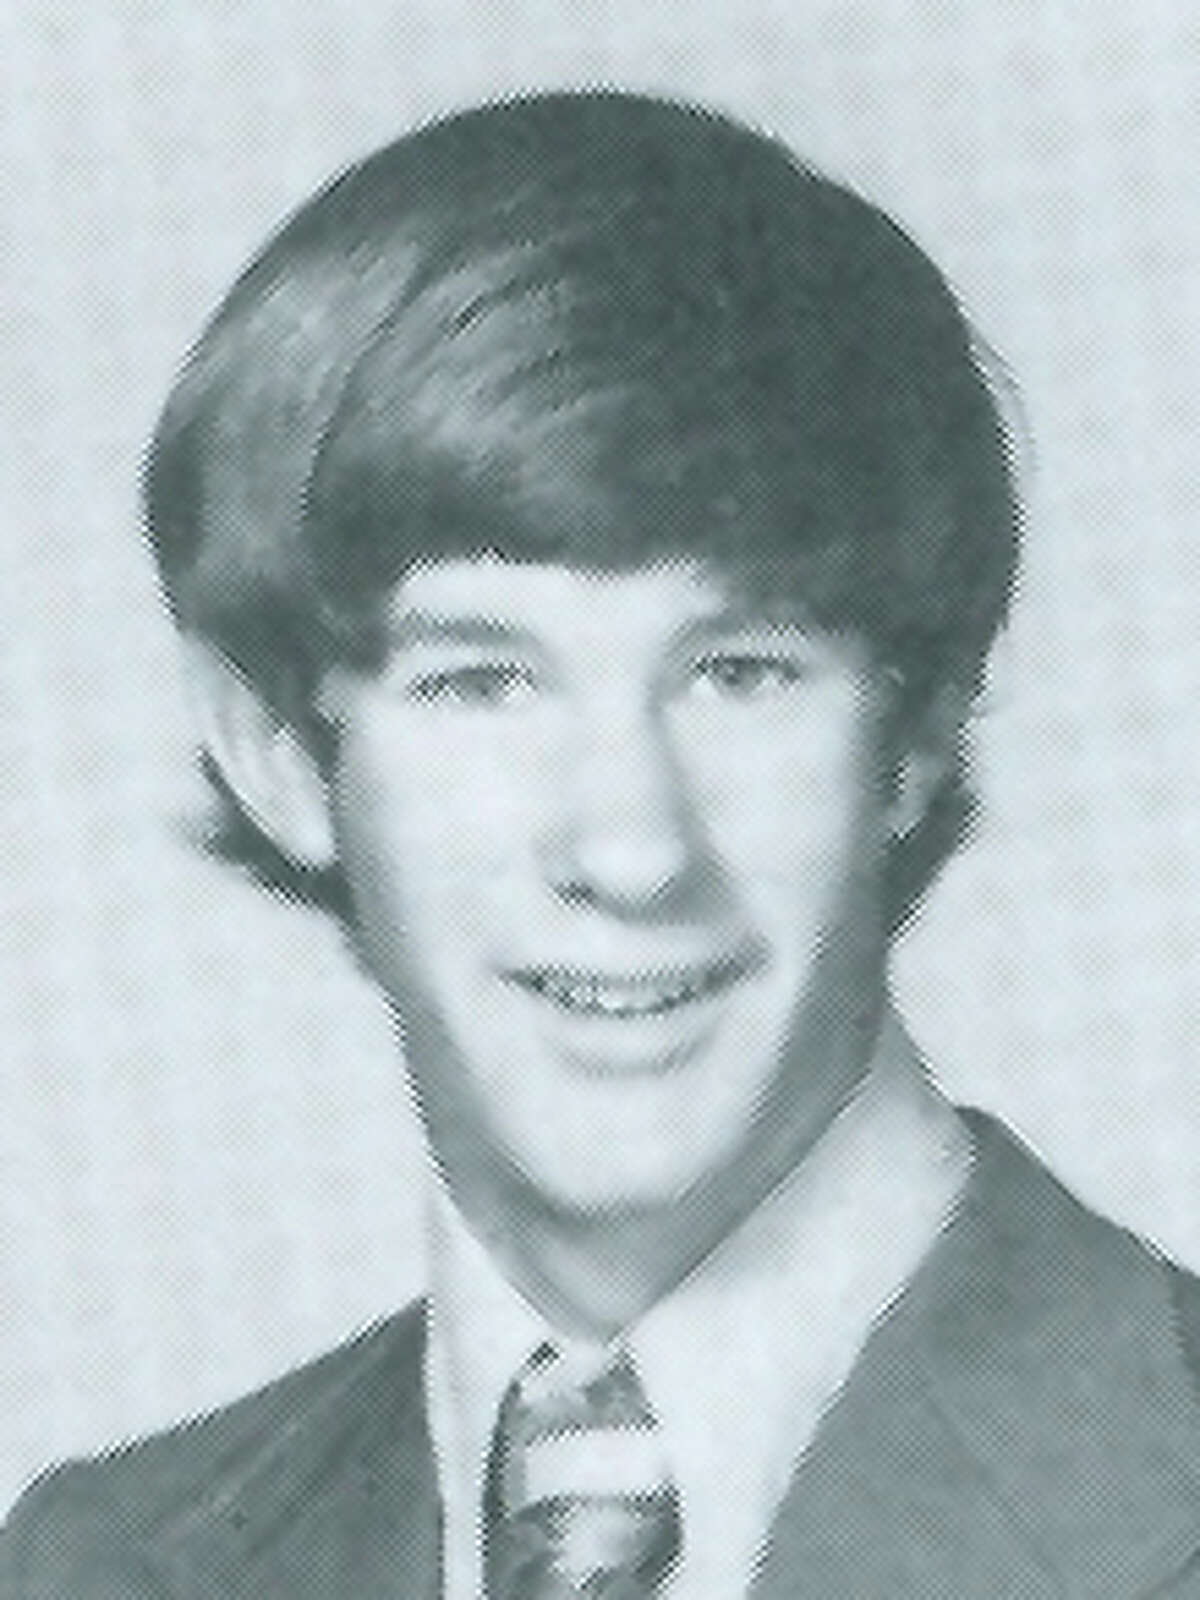 William McRaven, seen as a senior, attended Roosevelt High School in San Antonio.